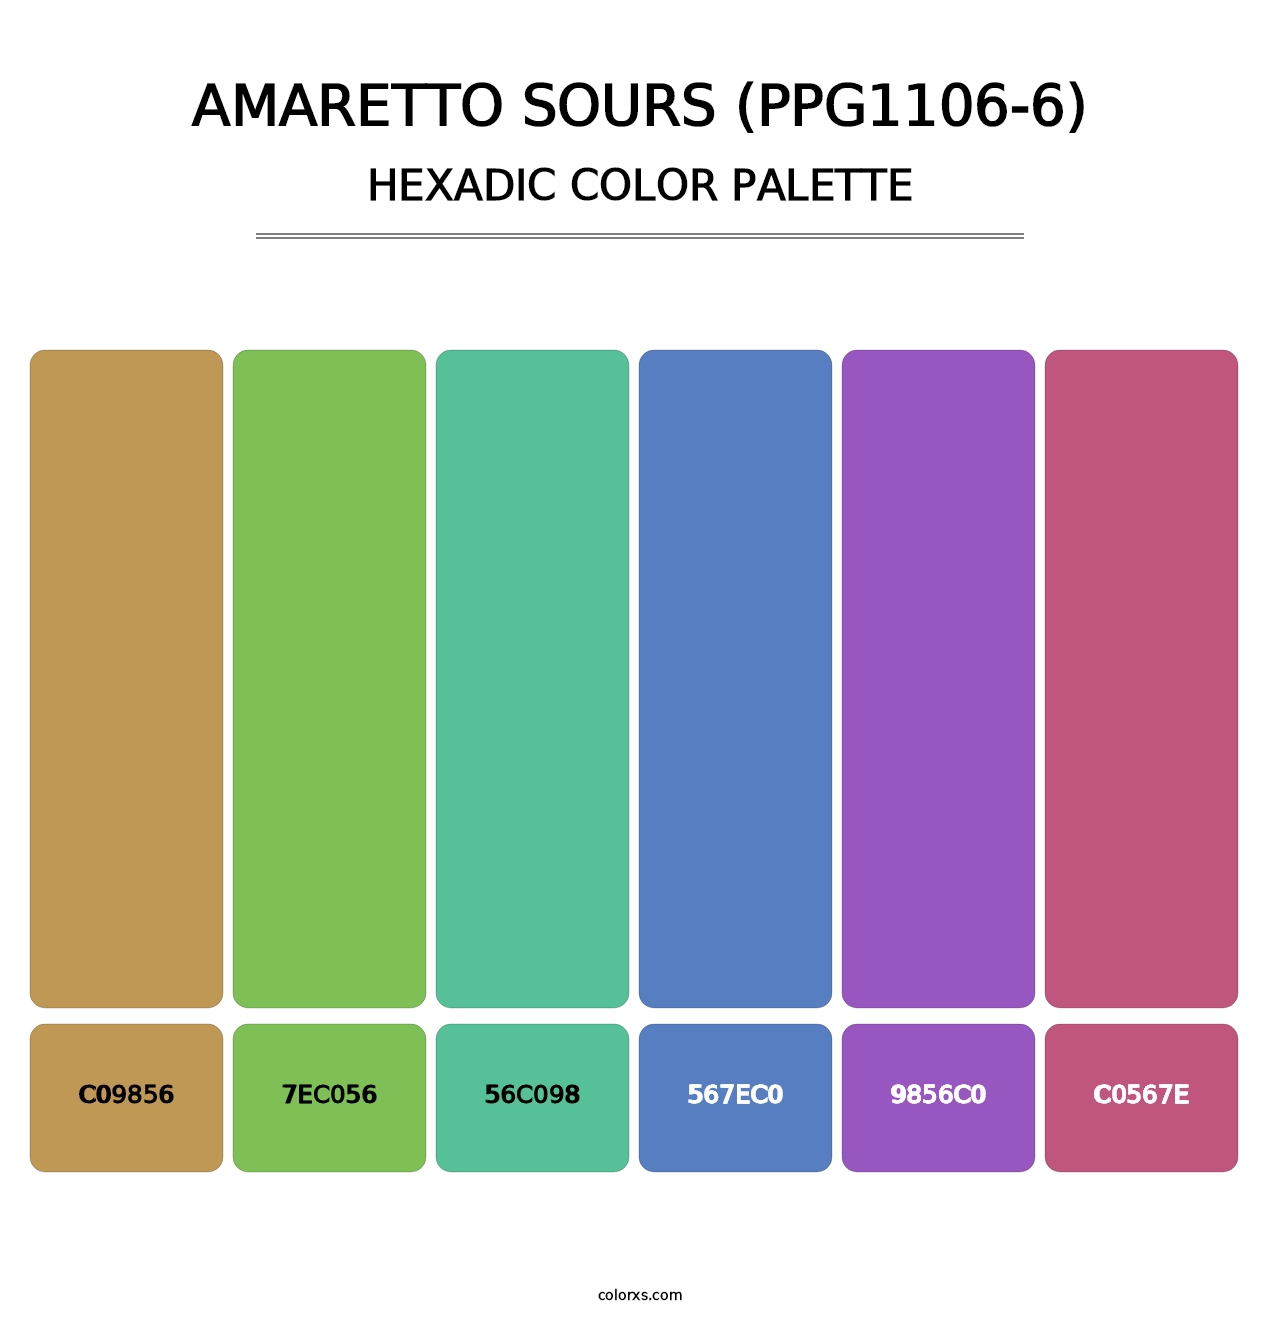 Amaretto Sours (PPG1106-6) - Hexadic Color Palette